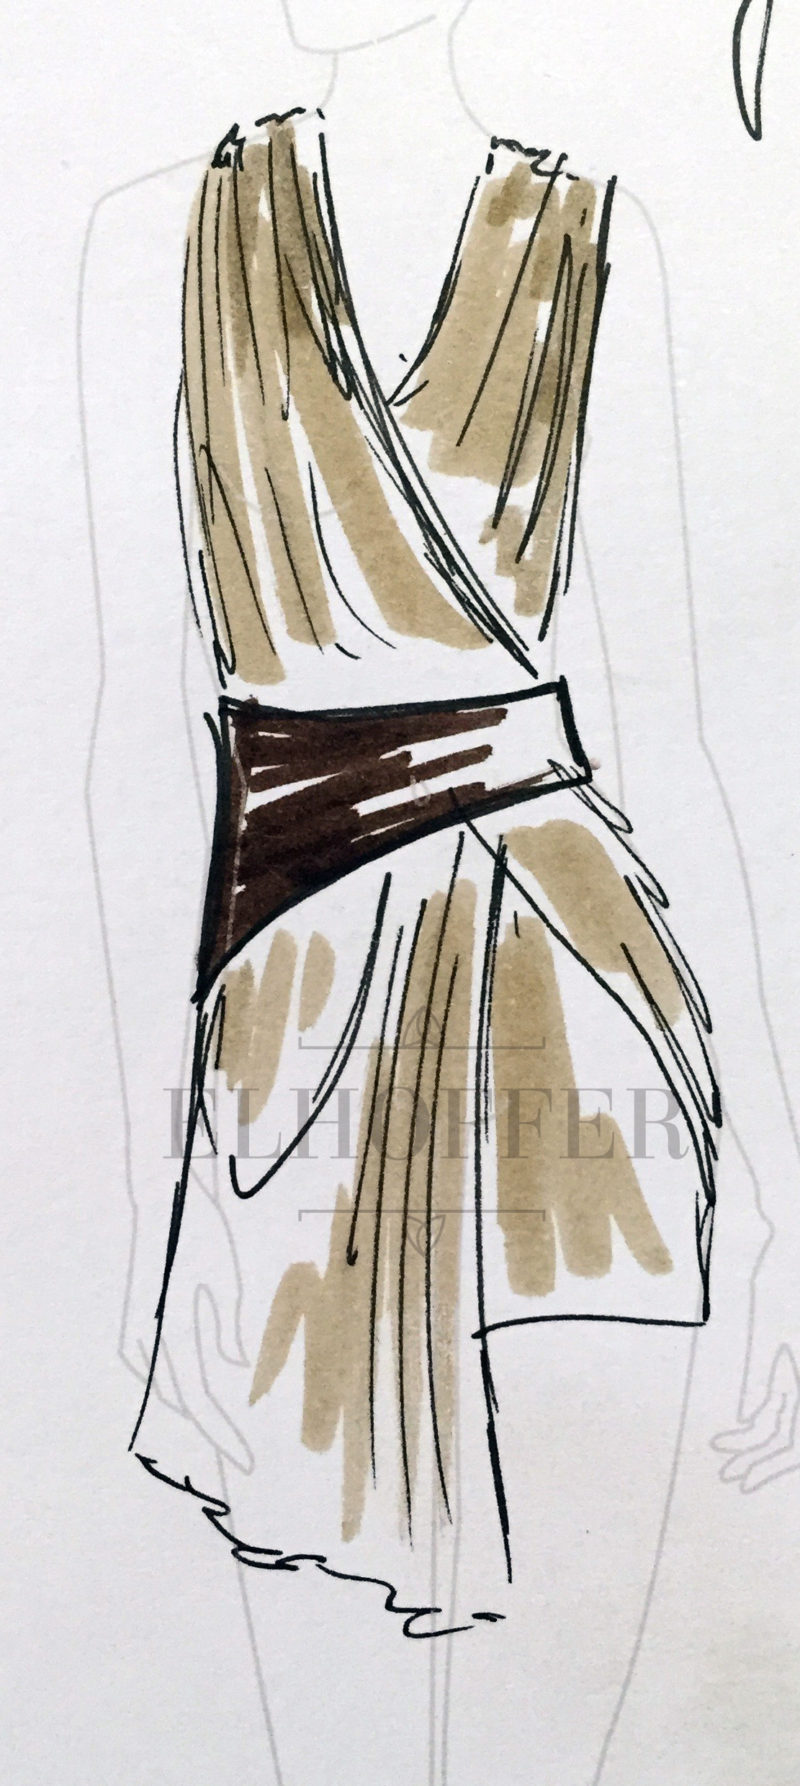 Elhoffer Design - Rey inspired dress concept sketch